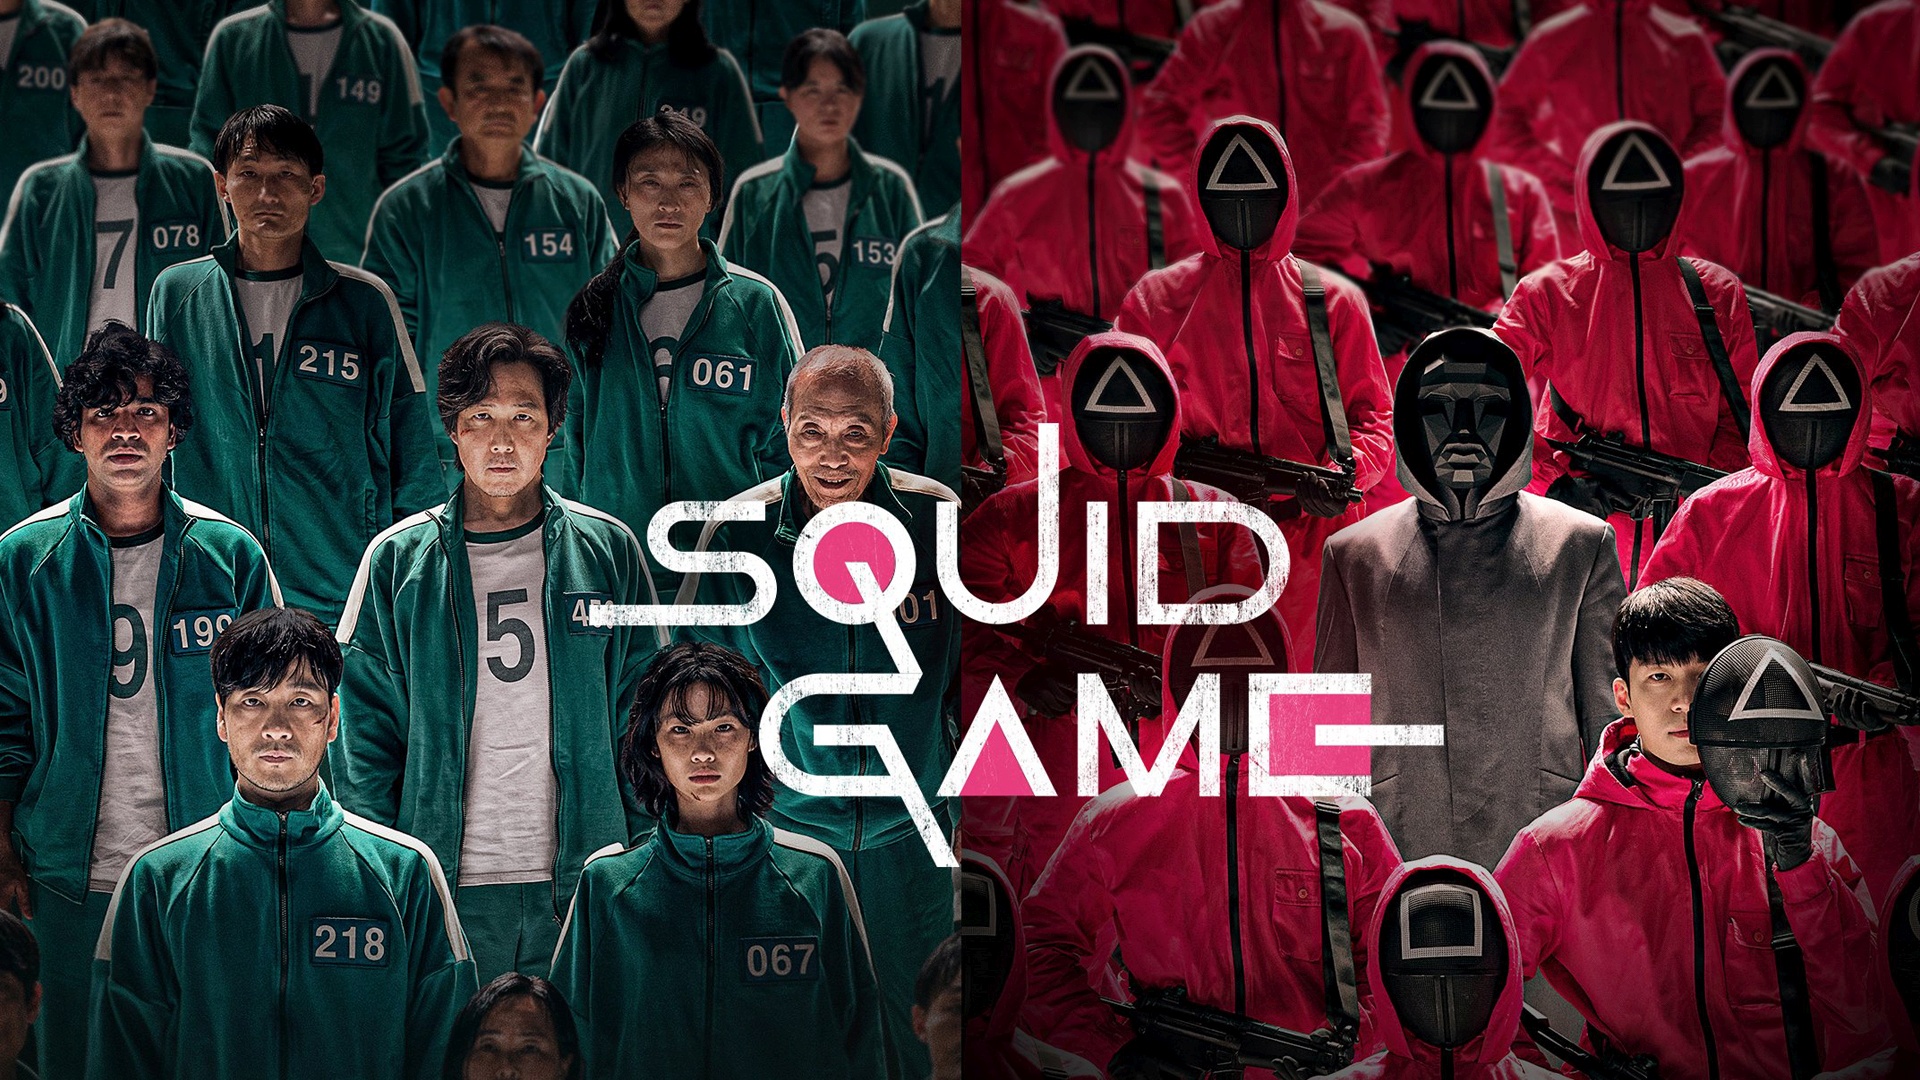 Squid Game desktop wallpaper free download